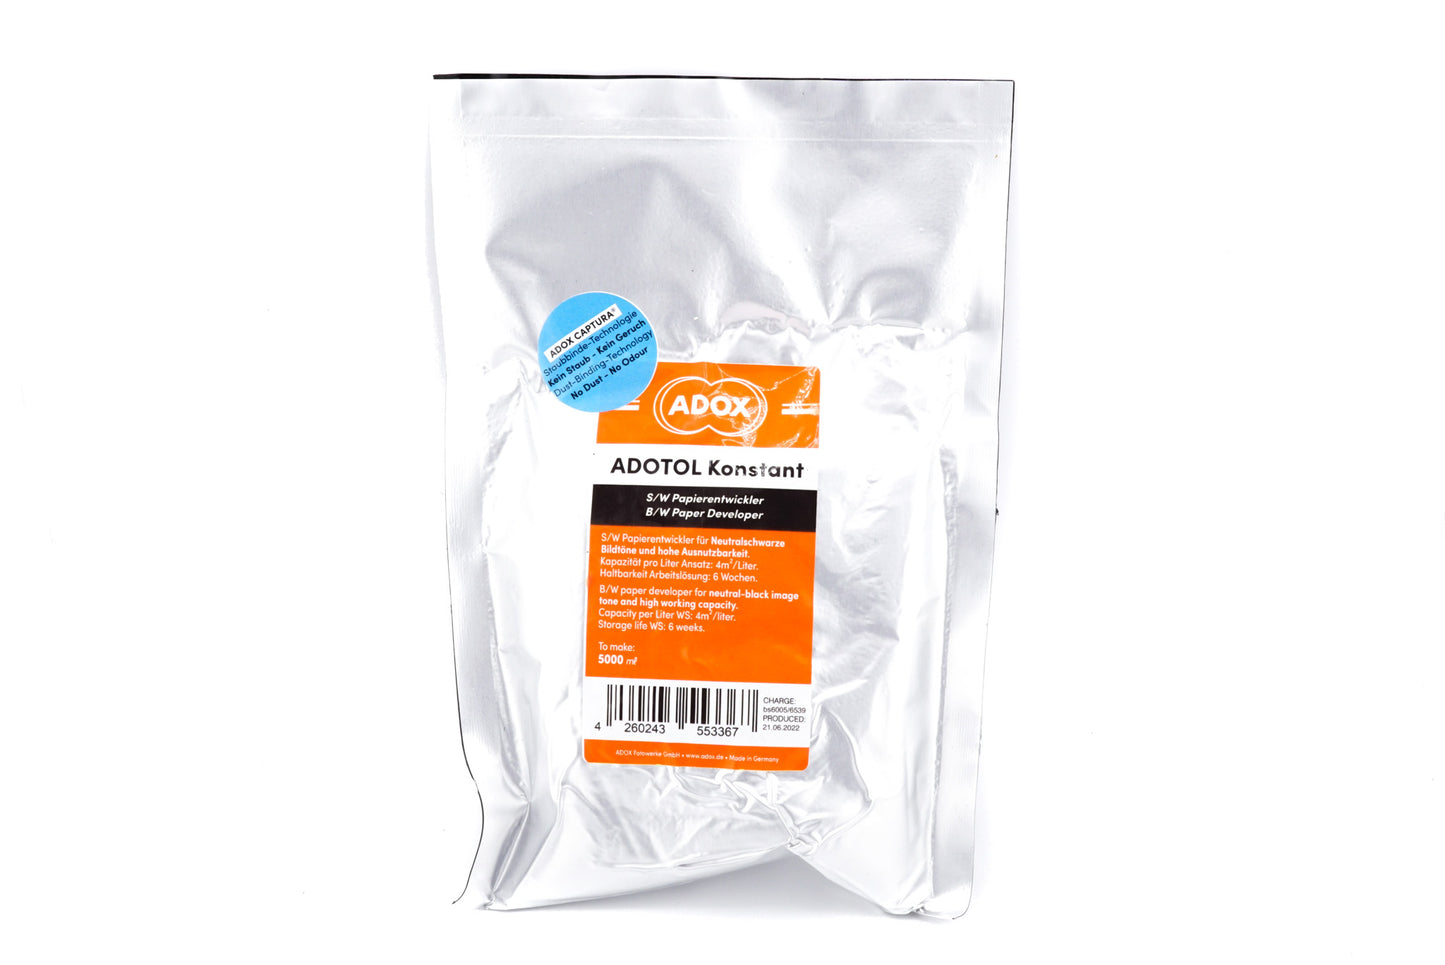 Adox Adotol-Konstant High-Capacity Paper Developer